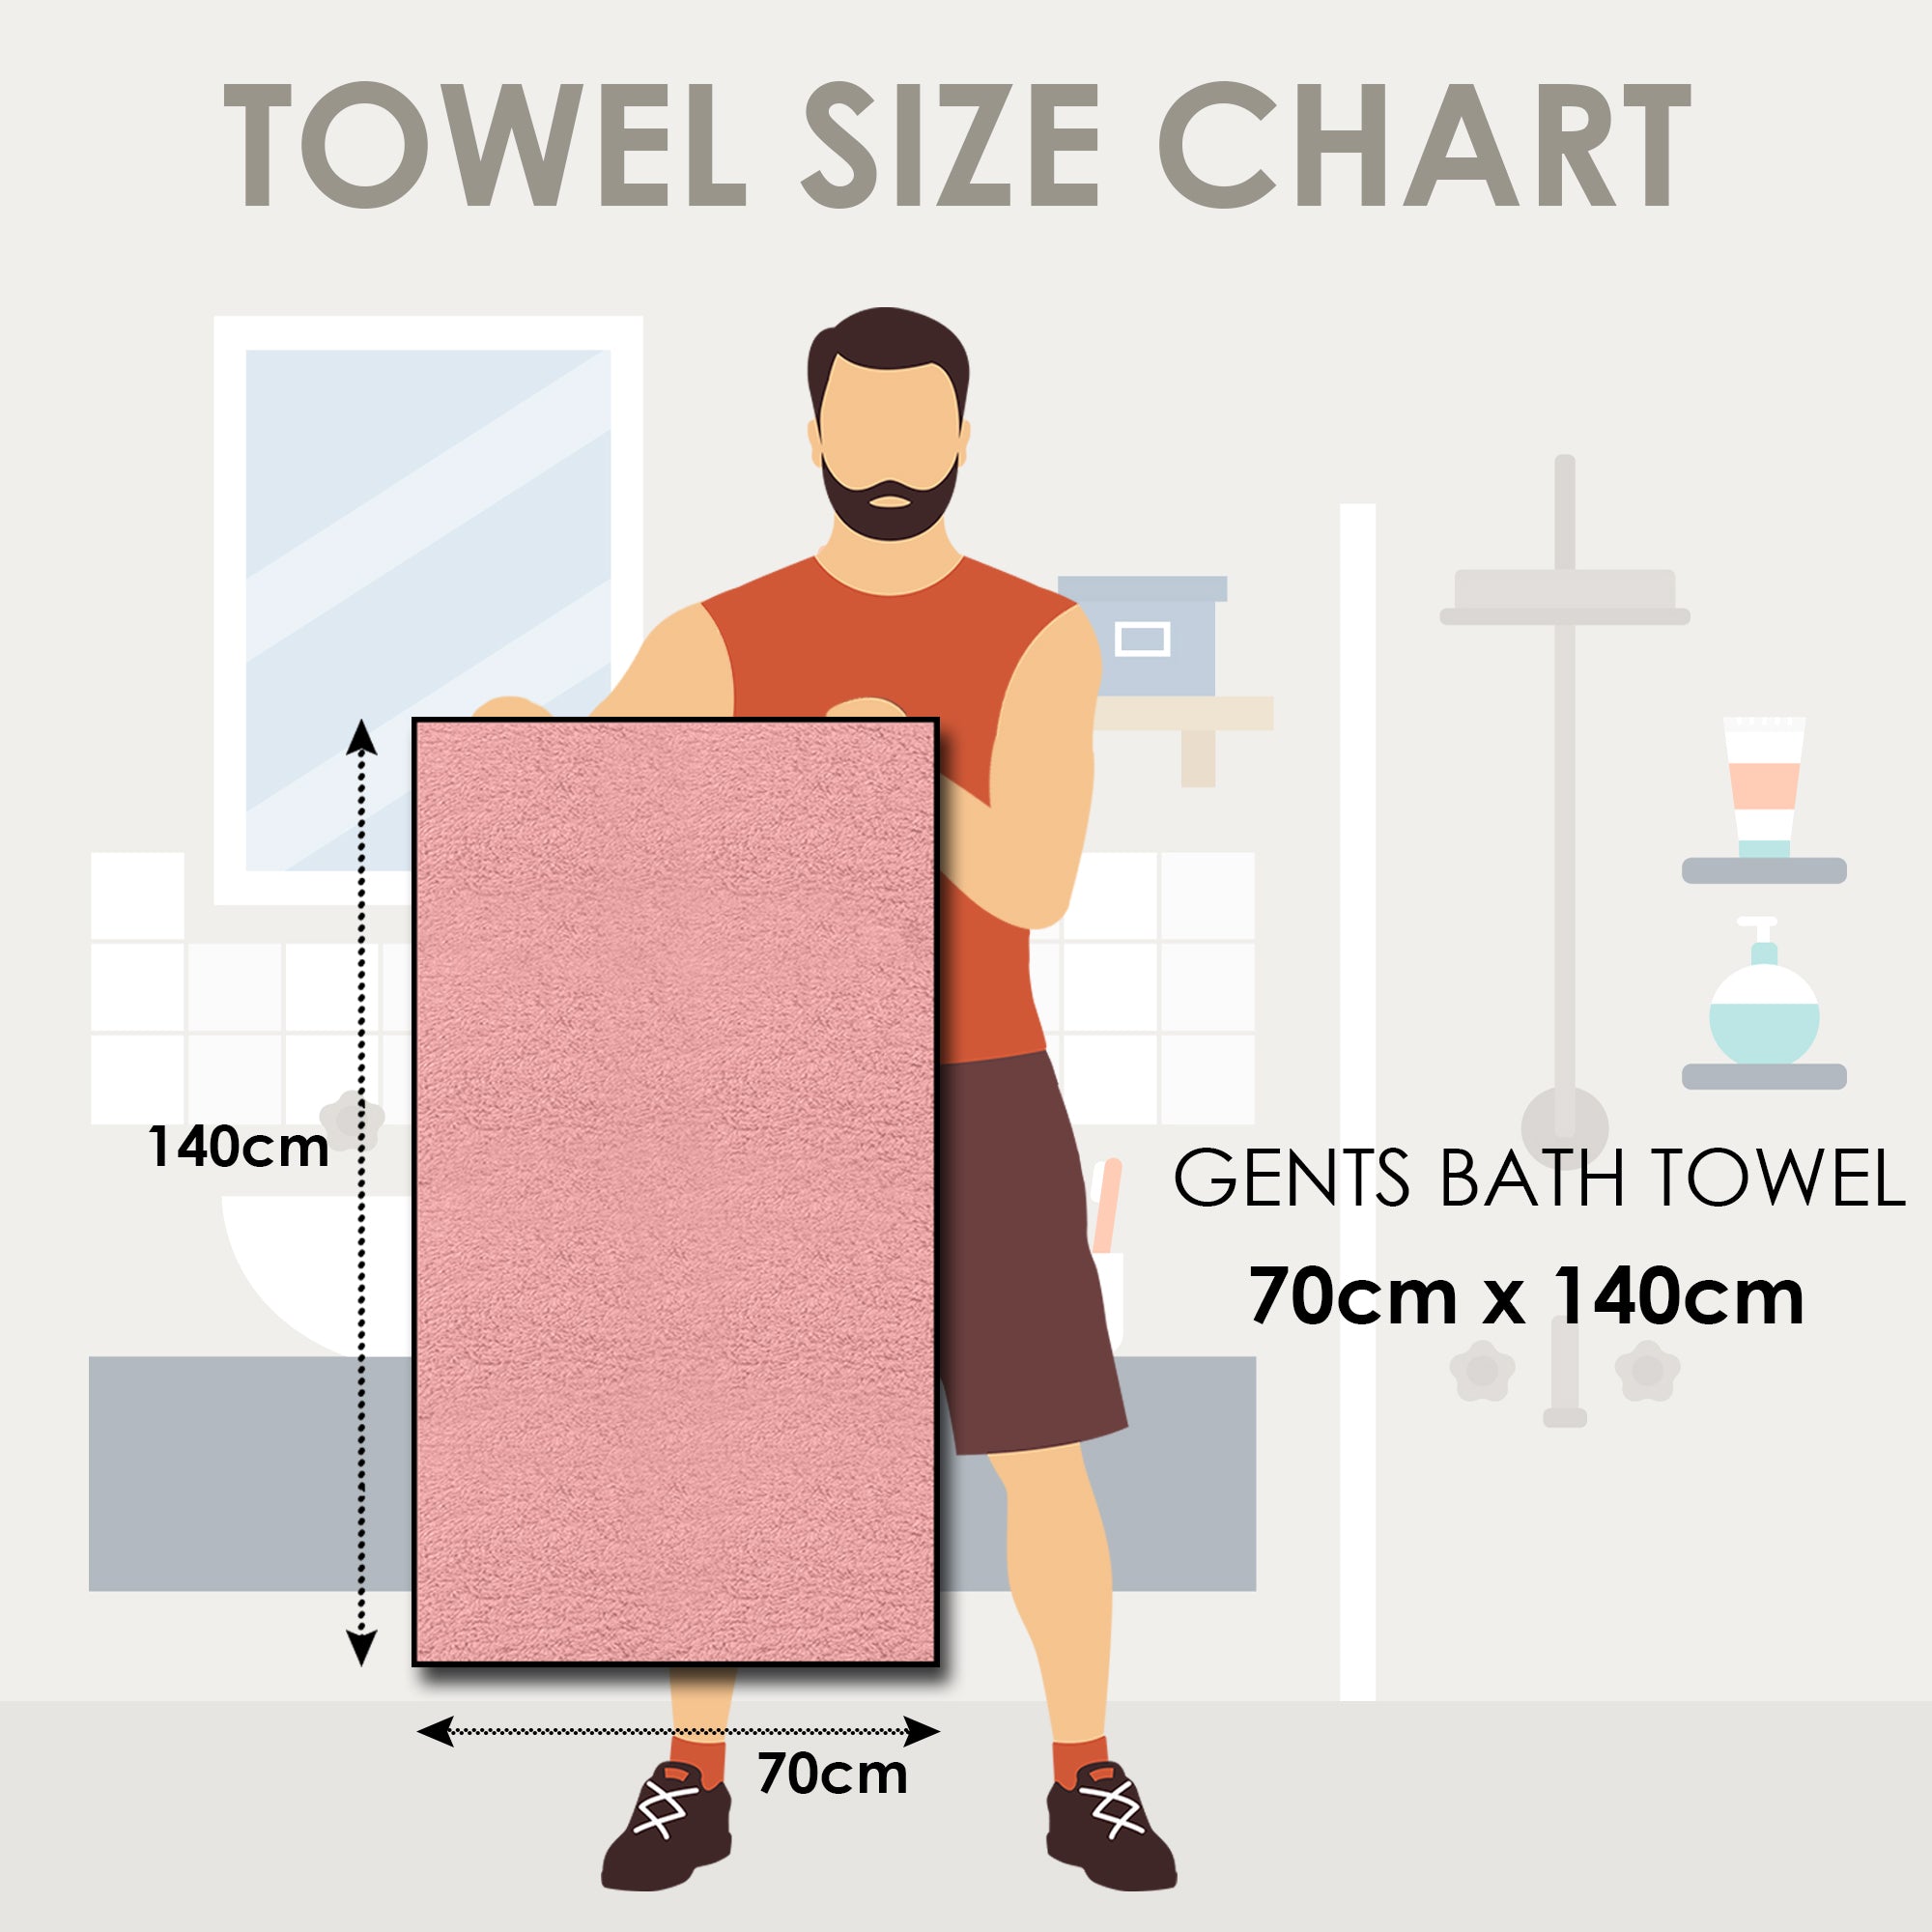 Story@Home 3 Units 100% Cotton Bath Towels - Navy